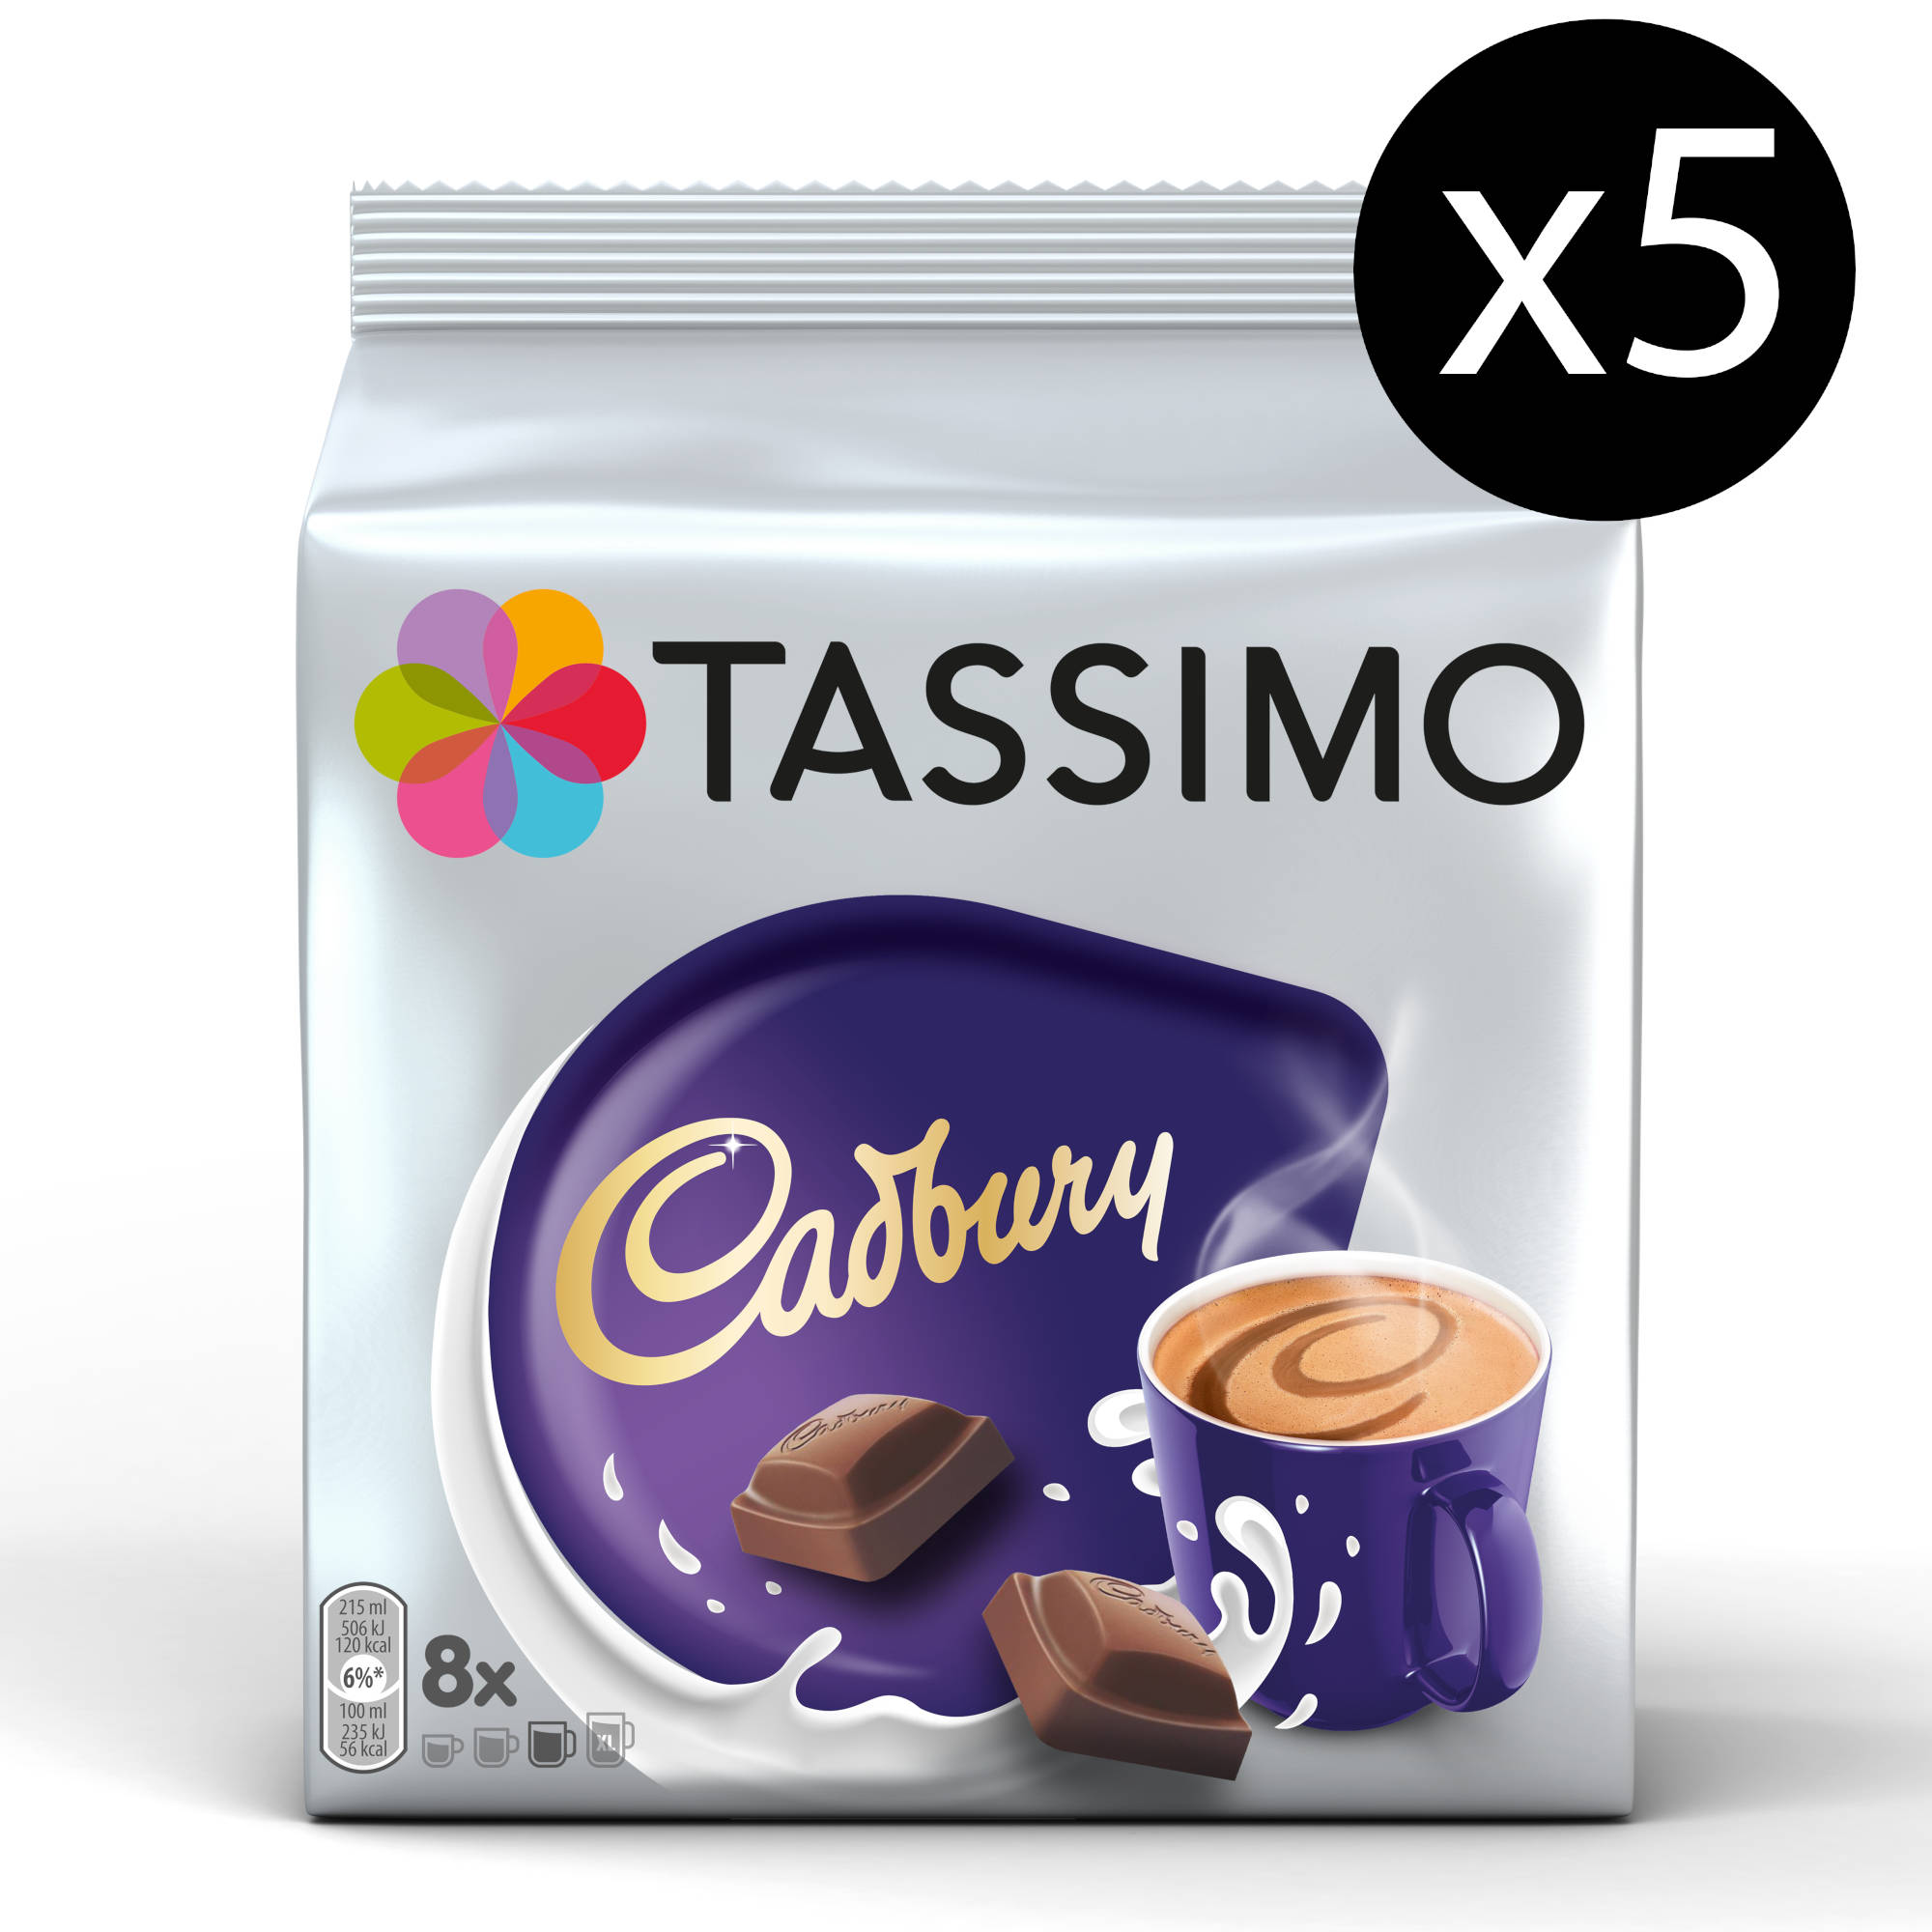 TASSIMO Cadbury Hot x Kakaokapseln 5 (T-Disc Maschine T Chocolate Discs Getränke System)) 8 (Tassimo